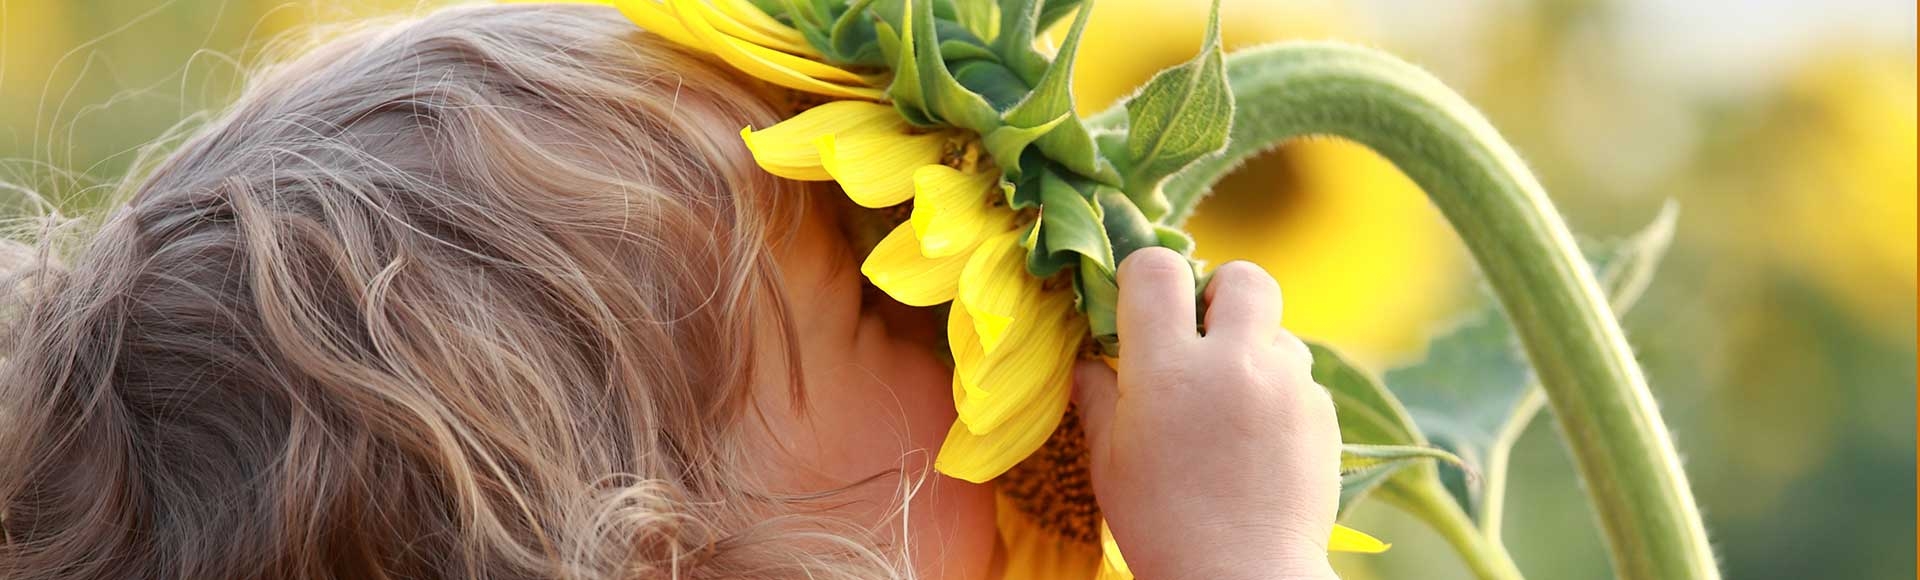 child smelling sunflower outside